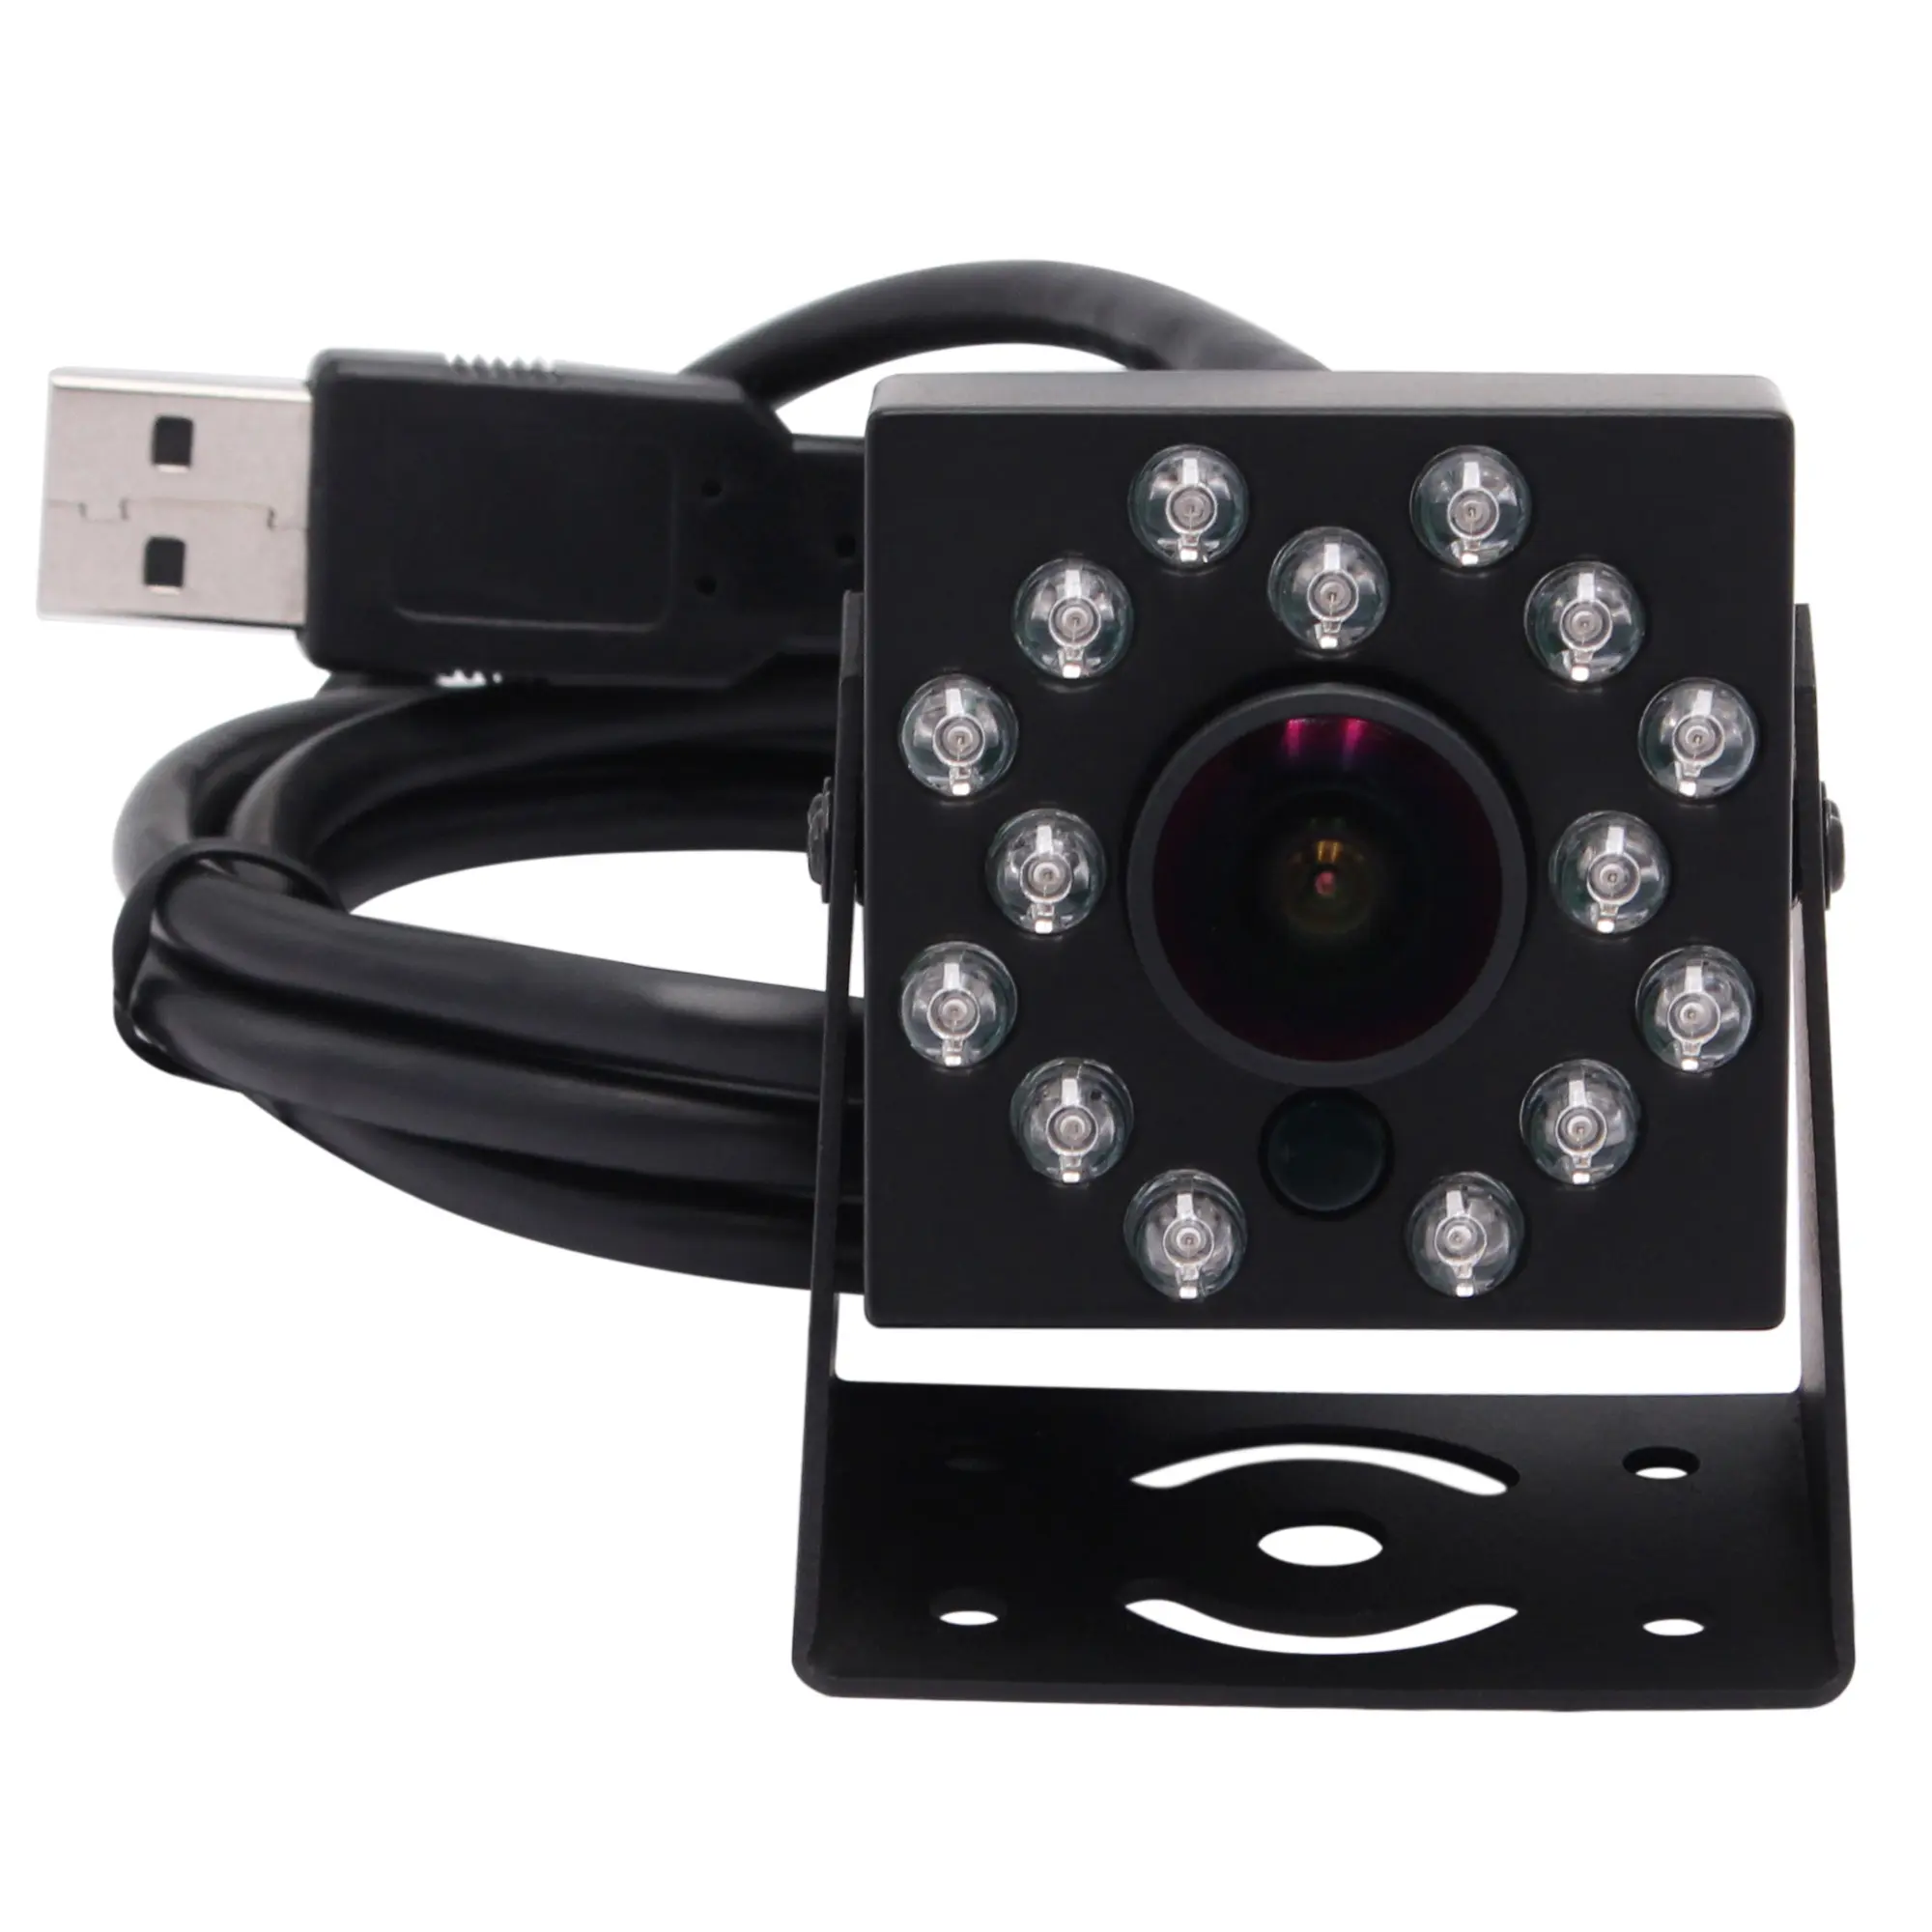 Full HD H.264 1080P 30fps กล้องวงจรปิดอินฟาเรดขนาดเล็ก,กล้อง CCTV ตัดวิดีโอ PC กล้องกลางคืน USB รักษาความปลอดภัย